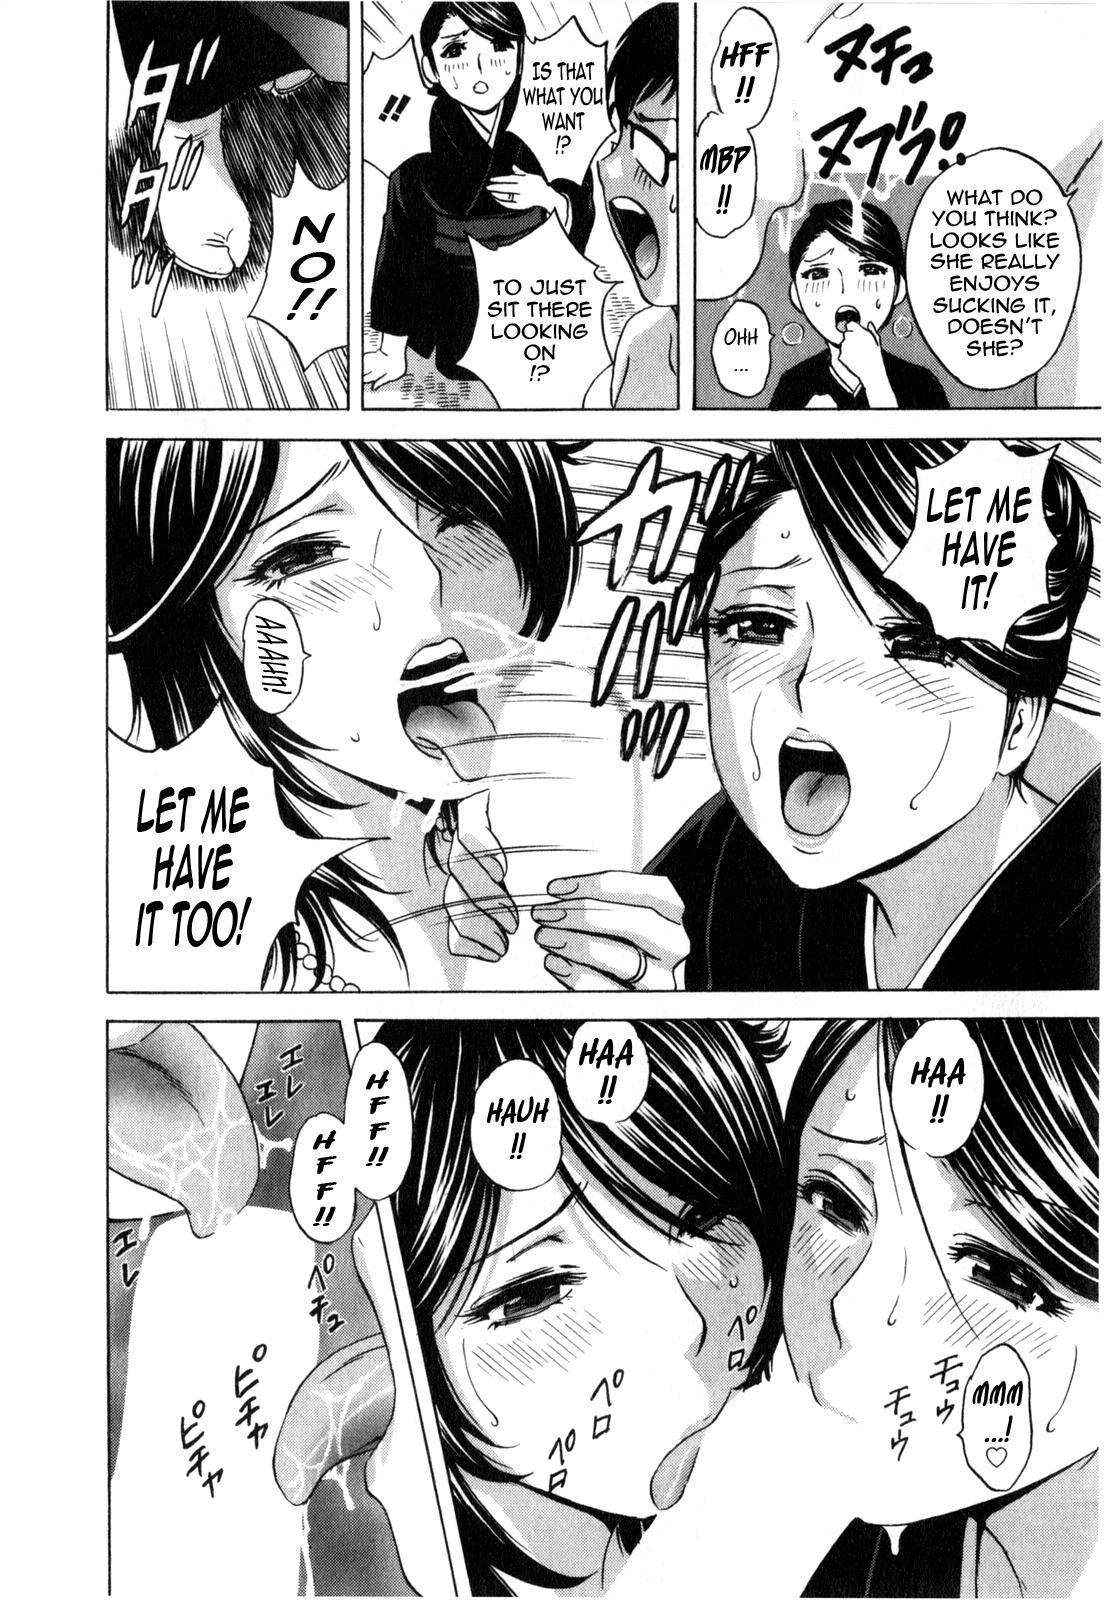 [Hidemaru] Life with Married Women Just Like a Manga 3 - Ch. 1-7 [English] {Tadanohito} 97